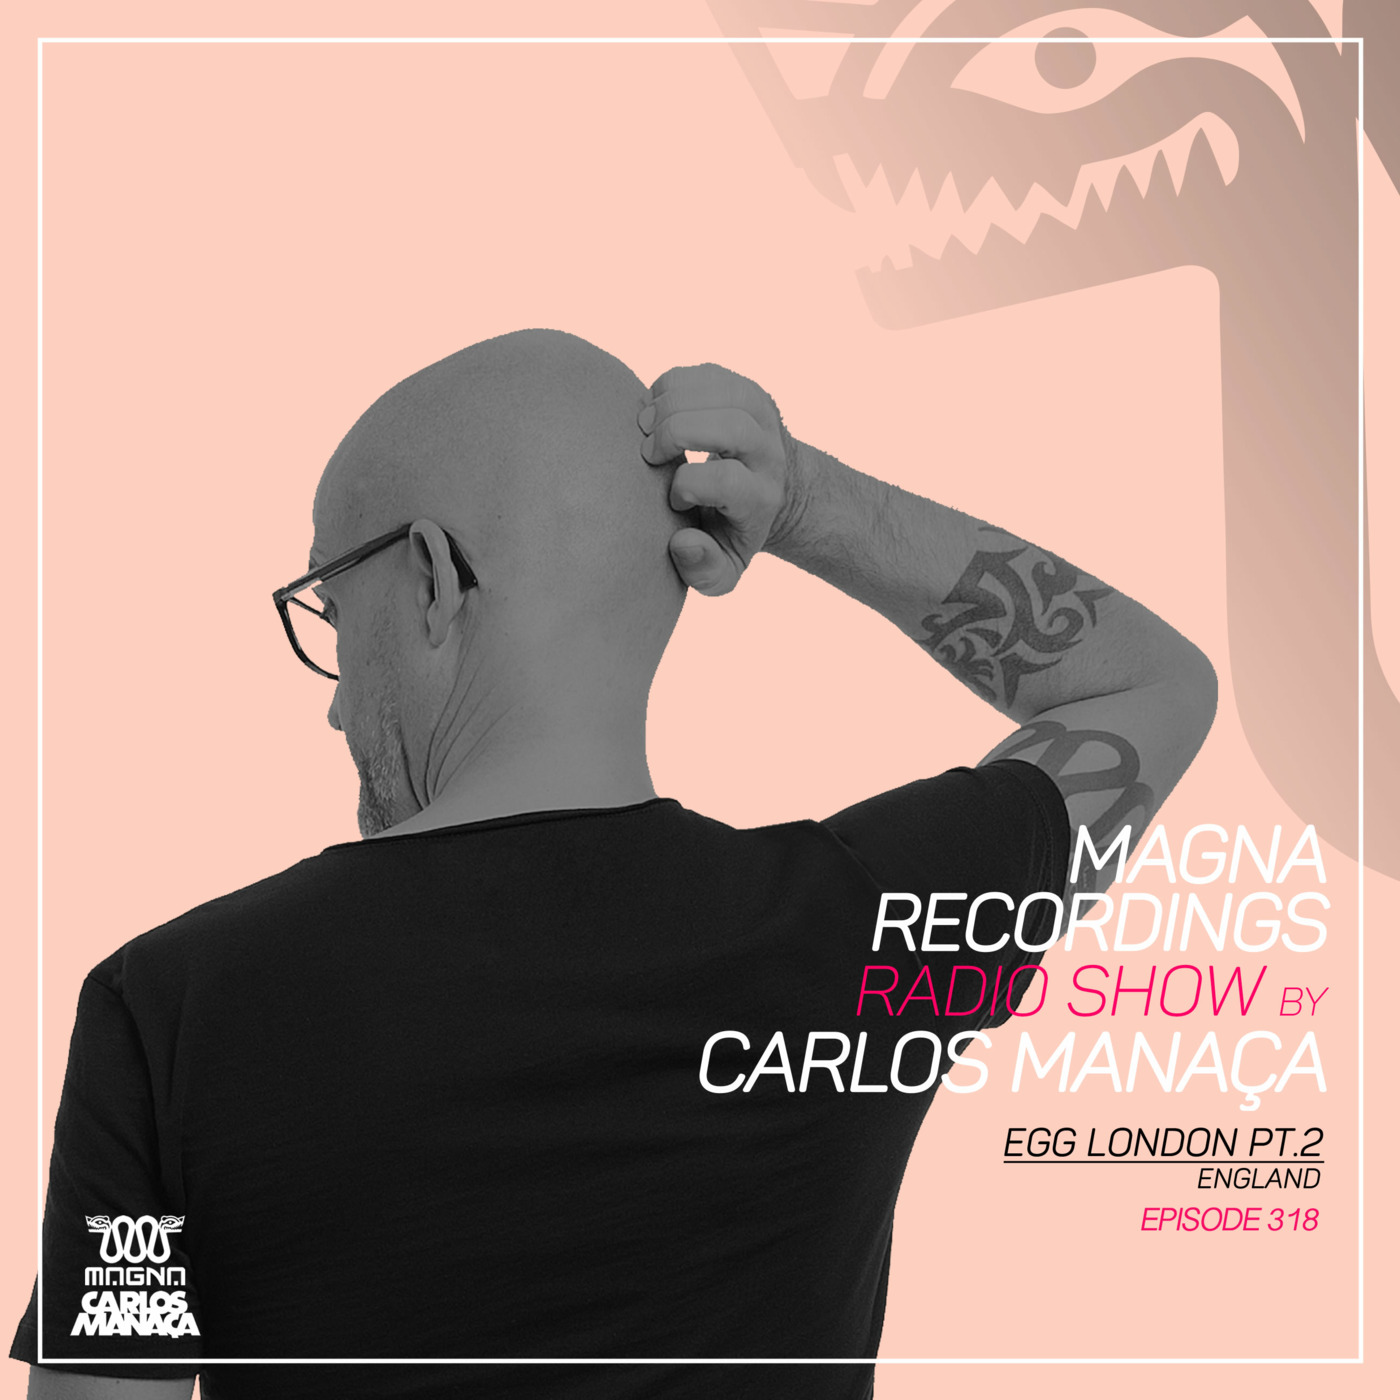 Episode 141: Magna Recordings Radio Show by Carlos Manaca 318 | EGG London Pt.2 [UK]